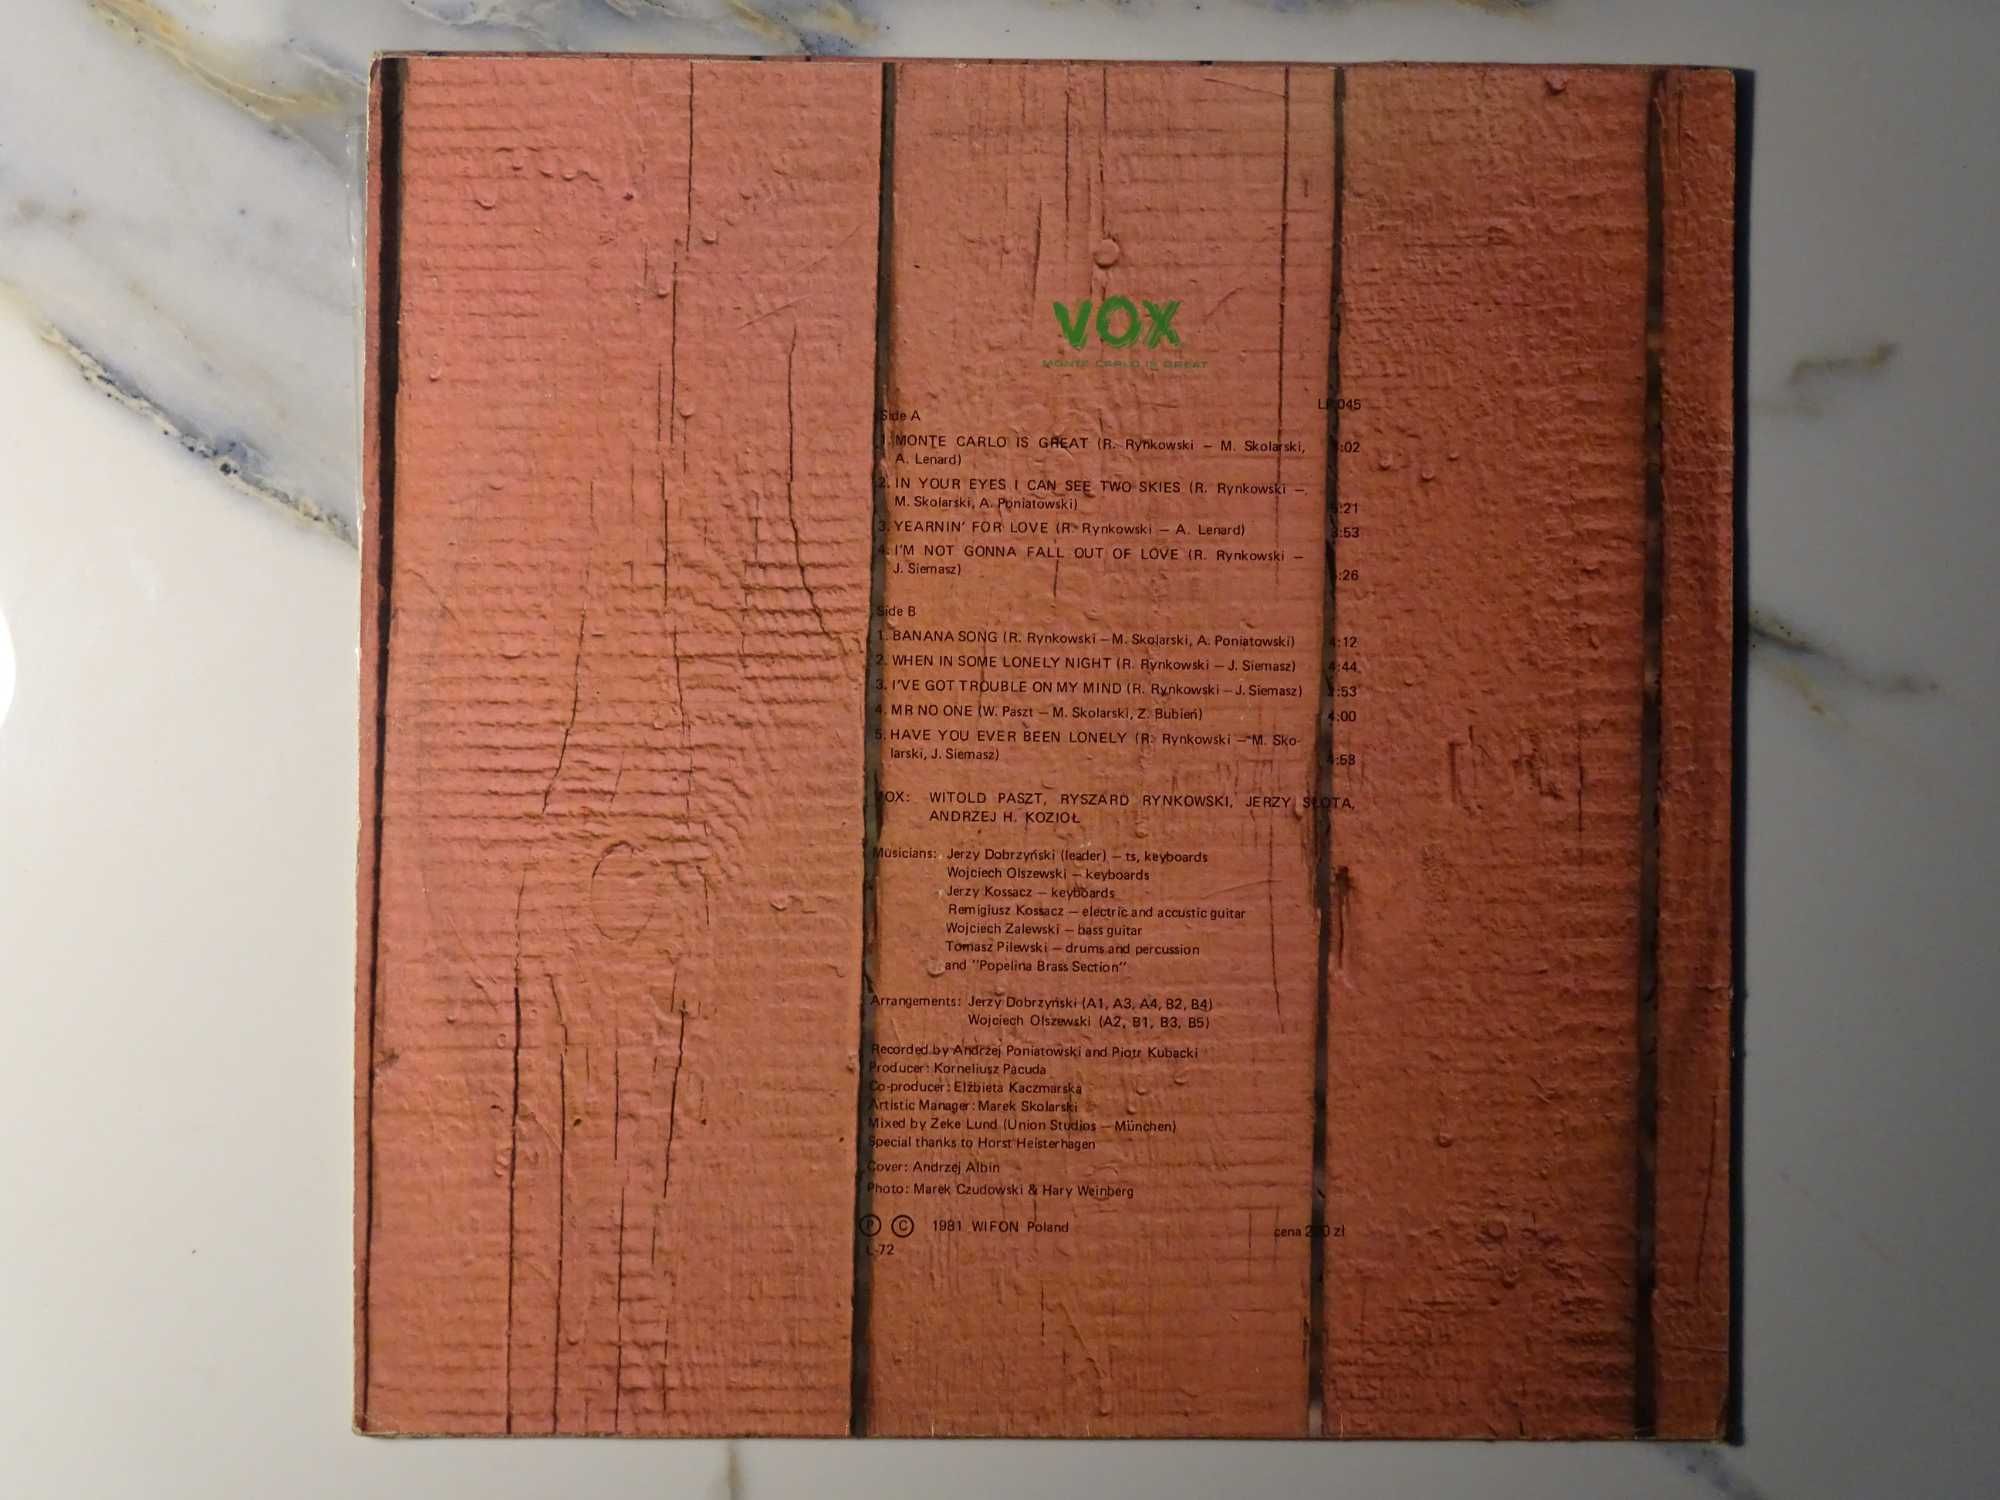 Winyl LP: VOX Rynkowski "Monte Carlo Is Great"